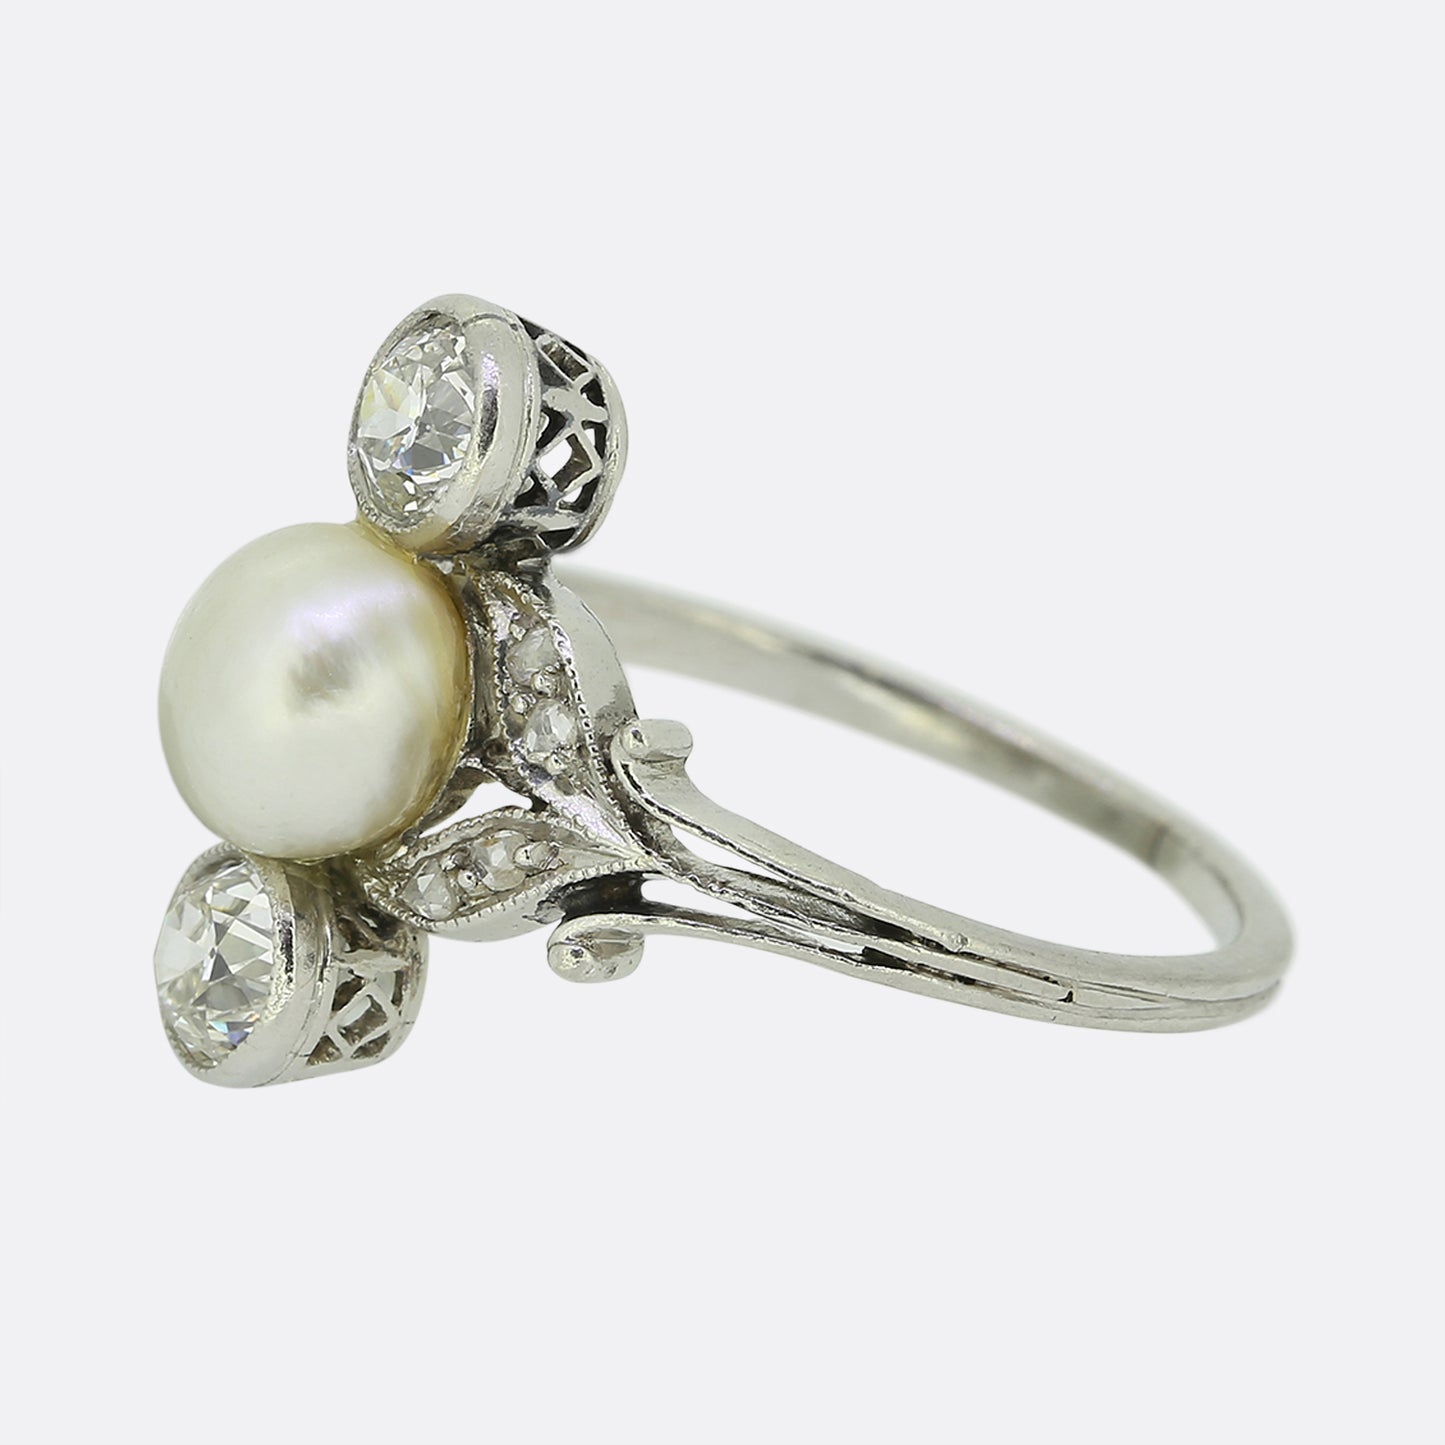 Edwardian Three-Stone Pearl and Diamond Ring